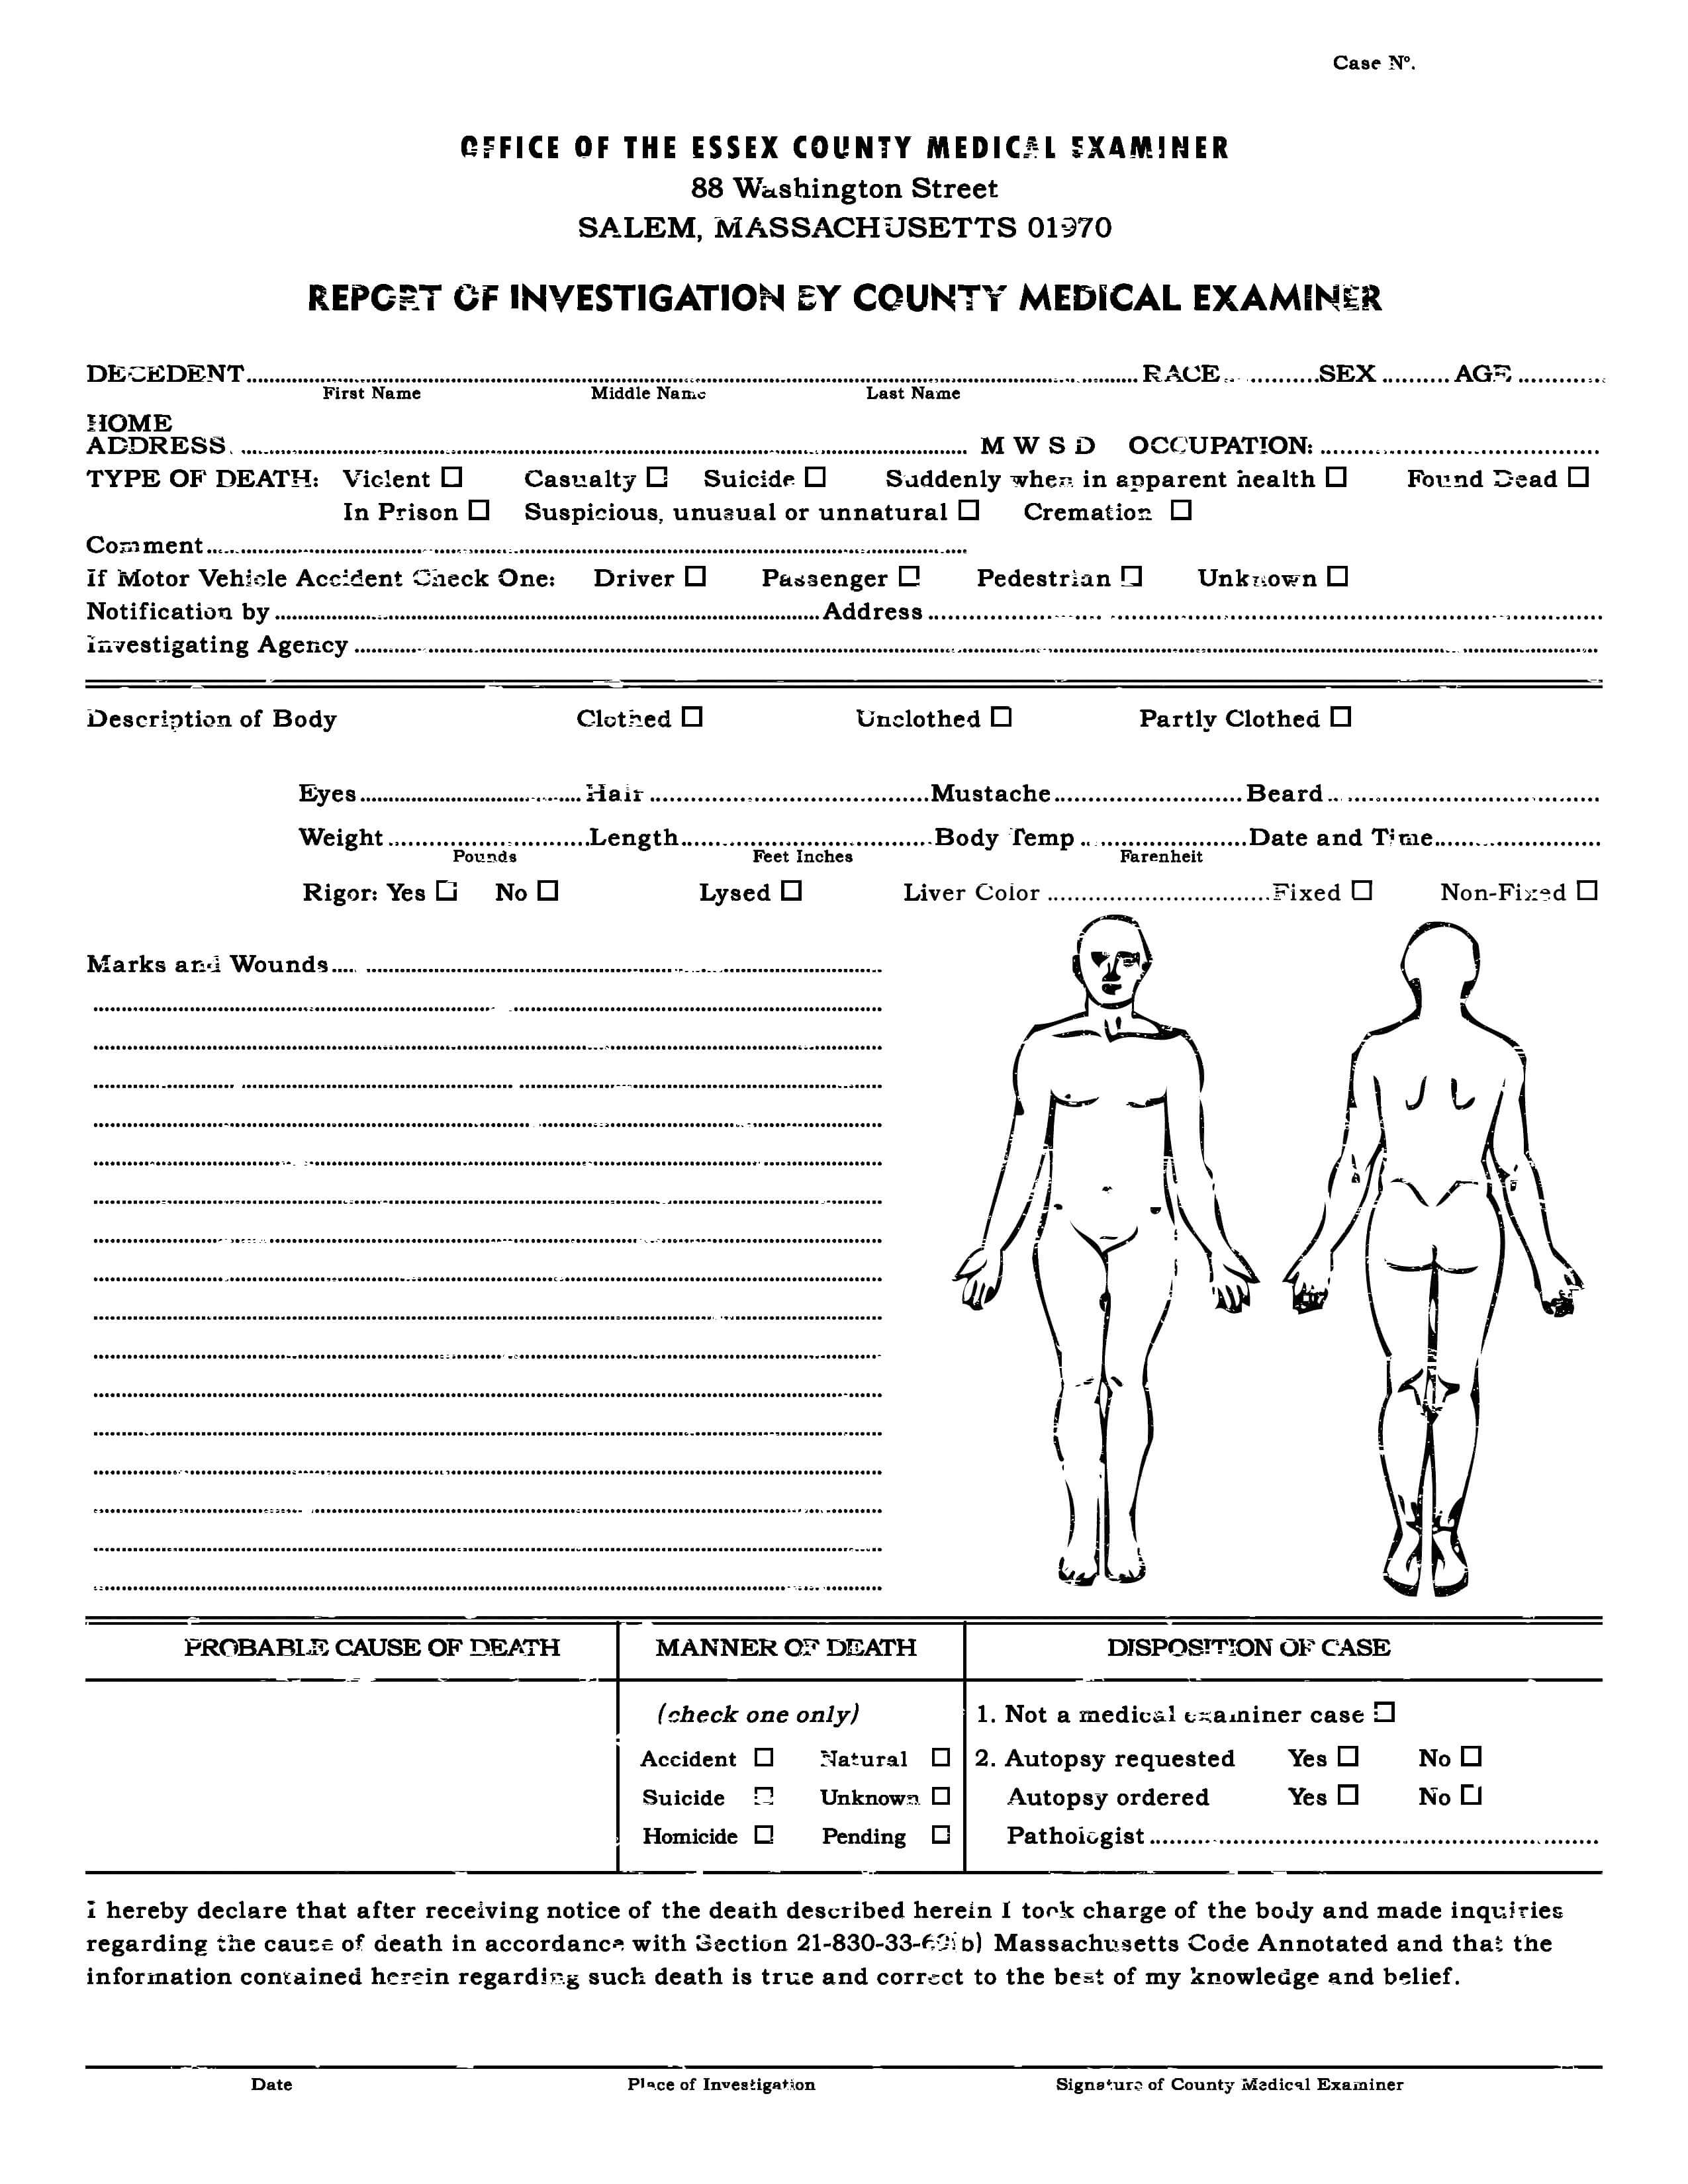 Autopsy Report Template - Atlantaauctionco Throughout Autopsy Report Template